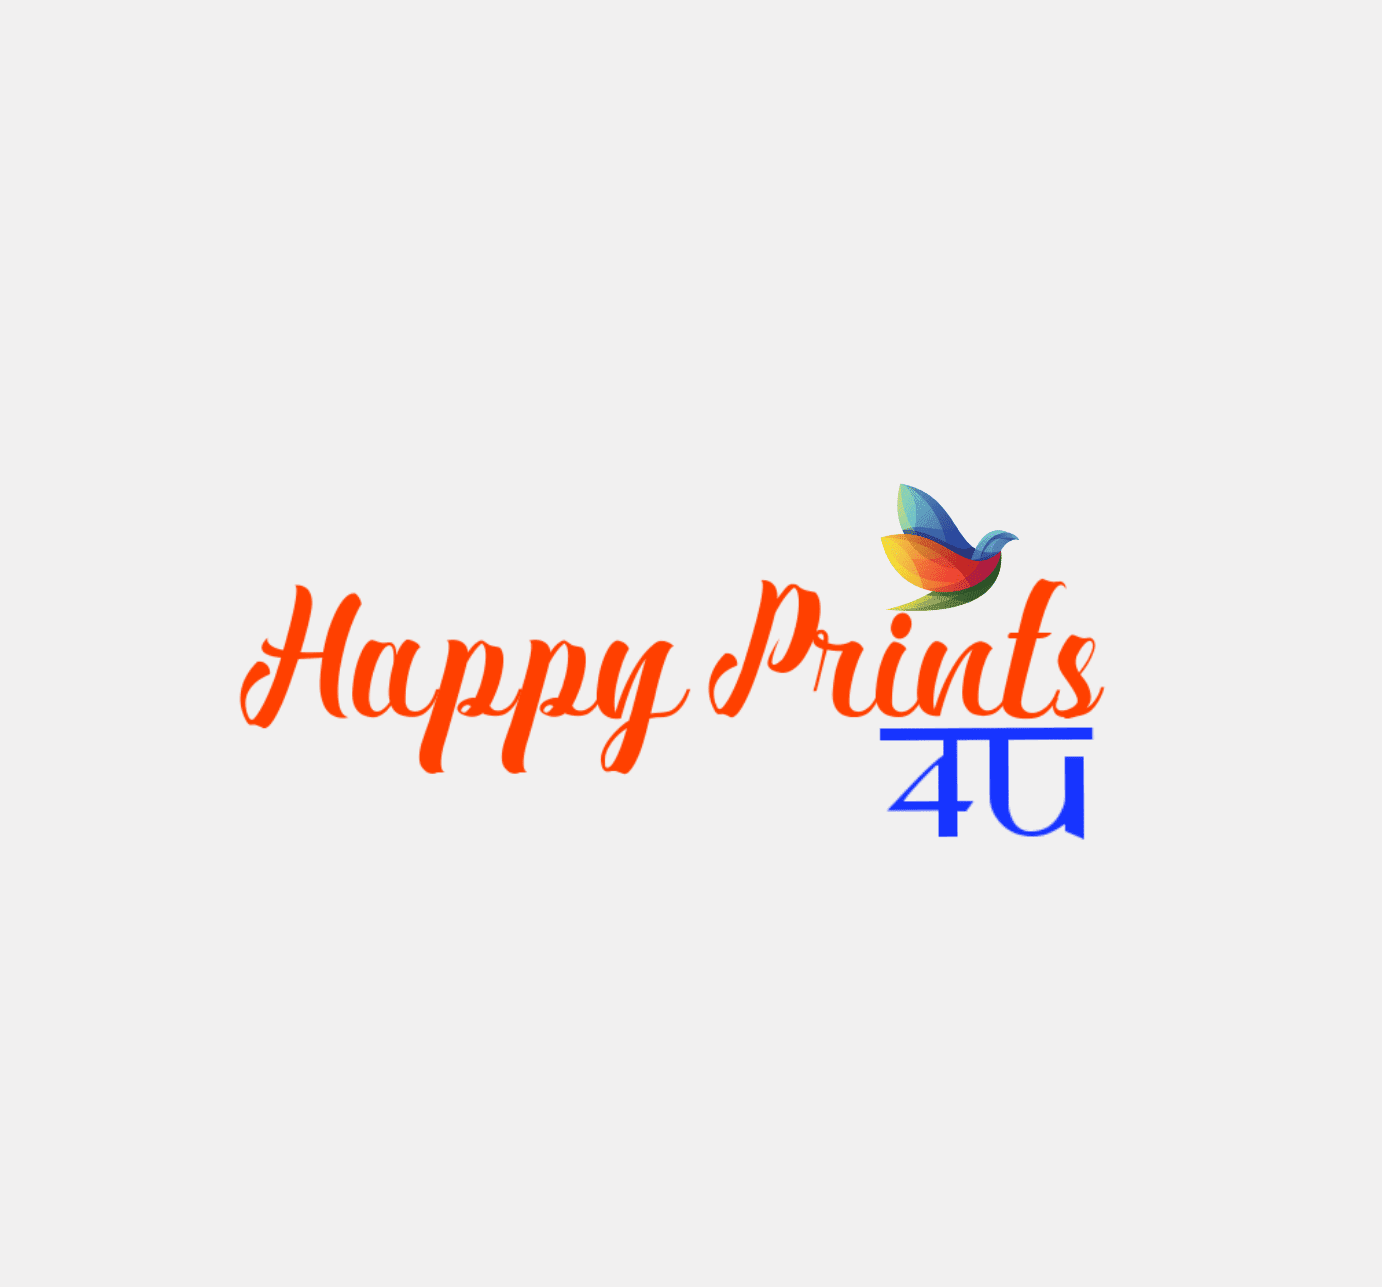 Happy Prints 4u